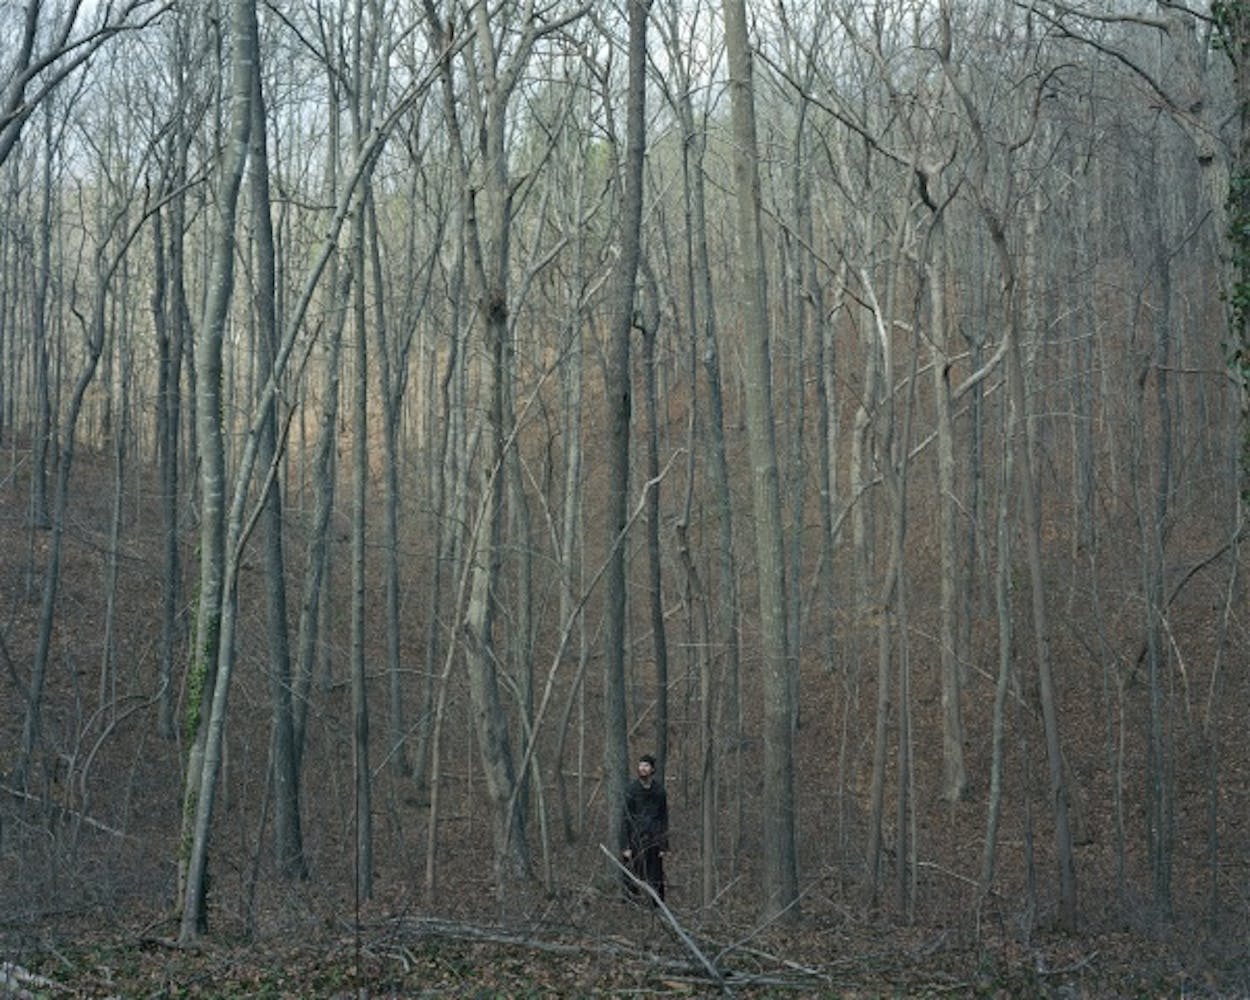 Alec Soth, untitled, 2006